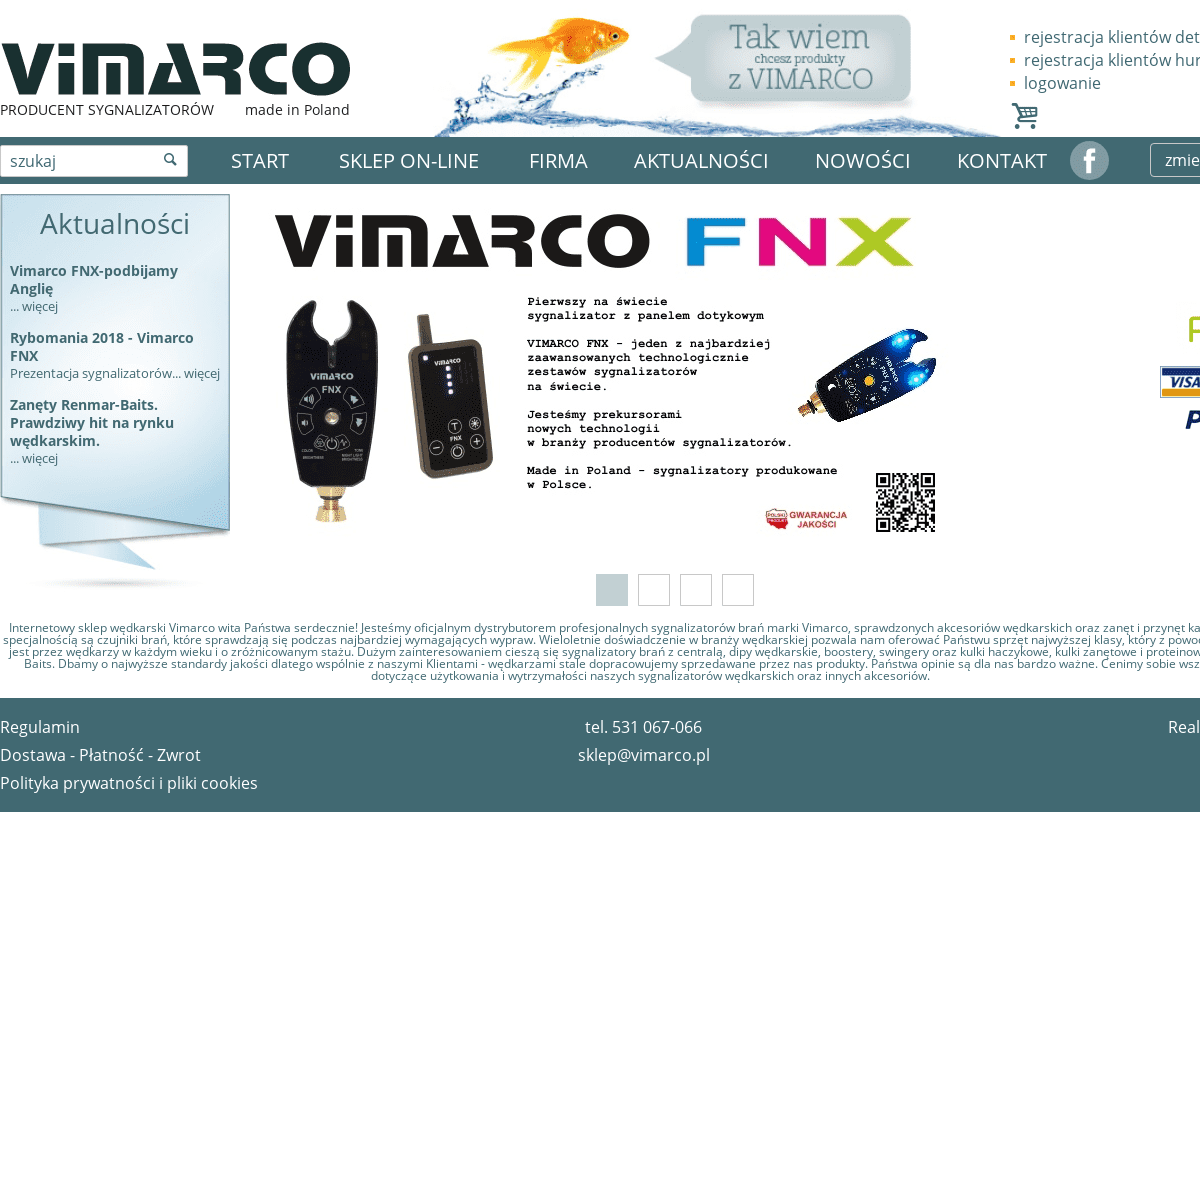 A complete backup of vimarco.pl